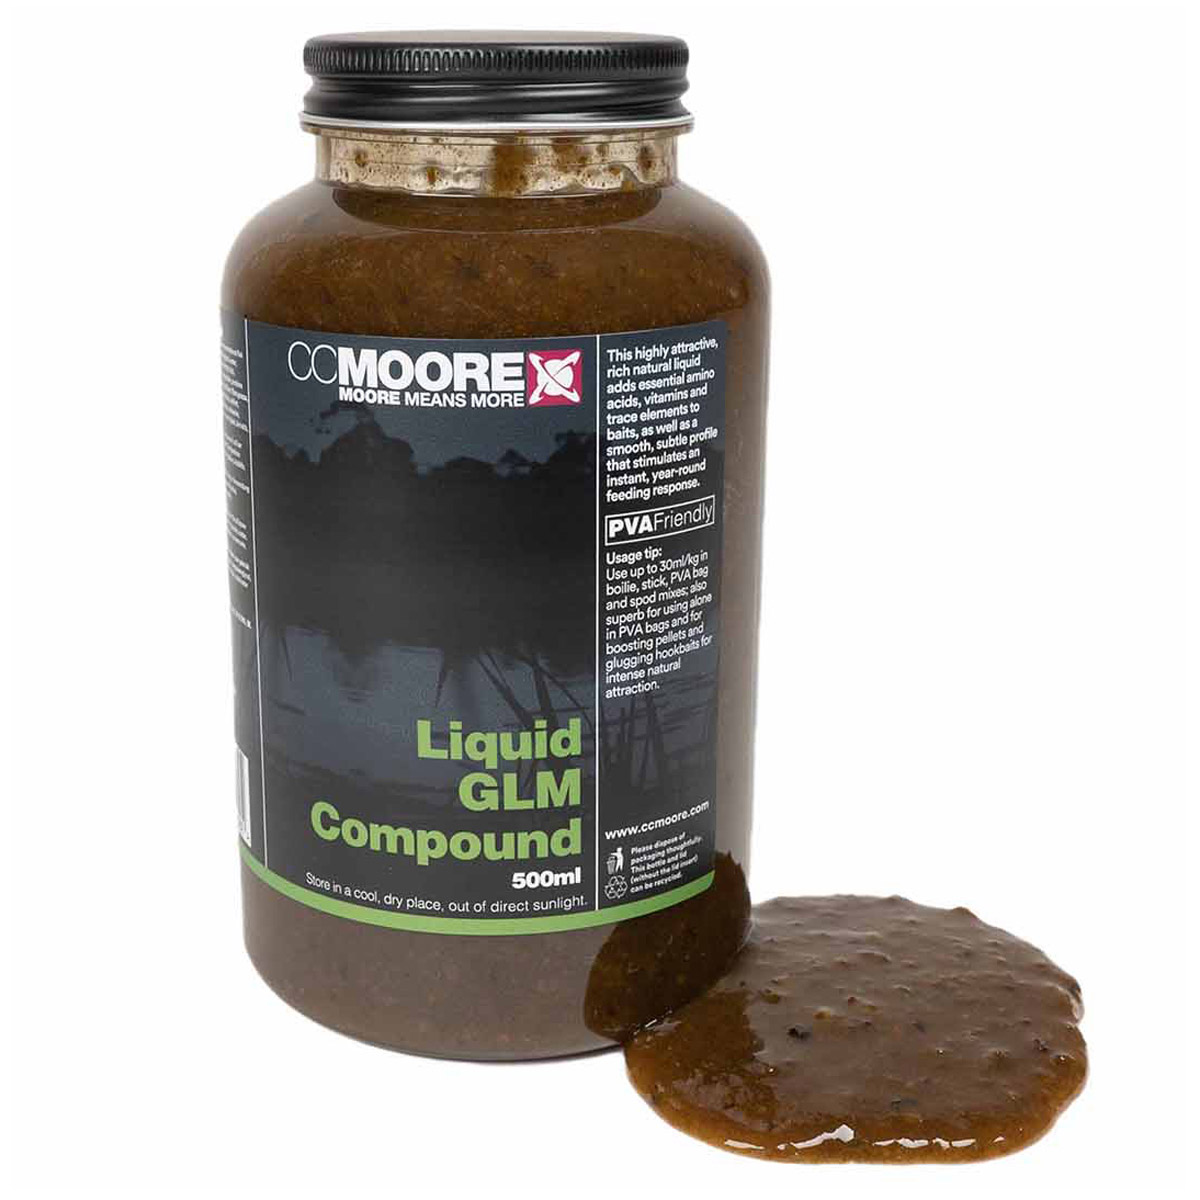 Cc Moore Liquid GLM Extract 500ml